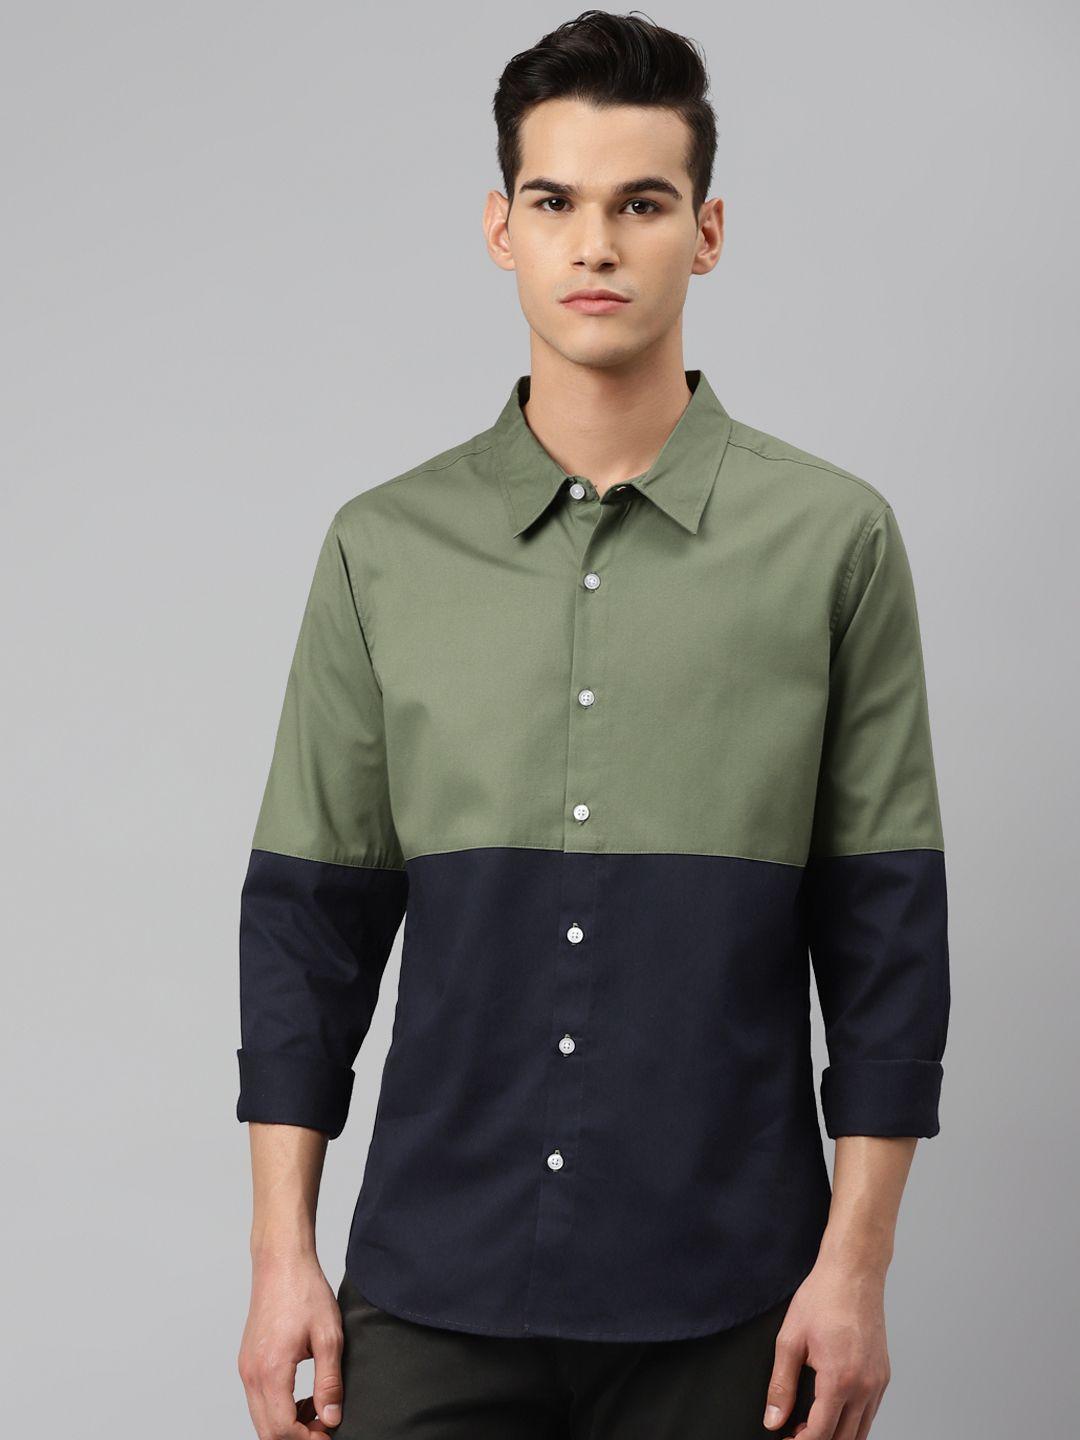 hubberholme men olive green & navy blue pure cotton colourblocked casual shirt